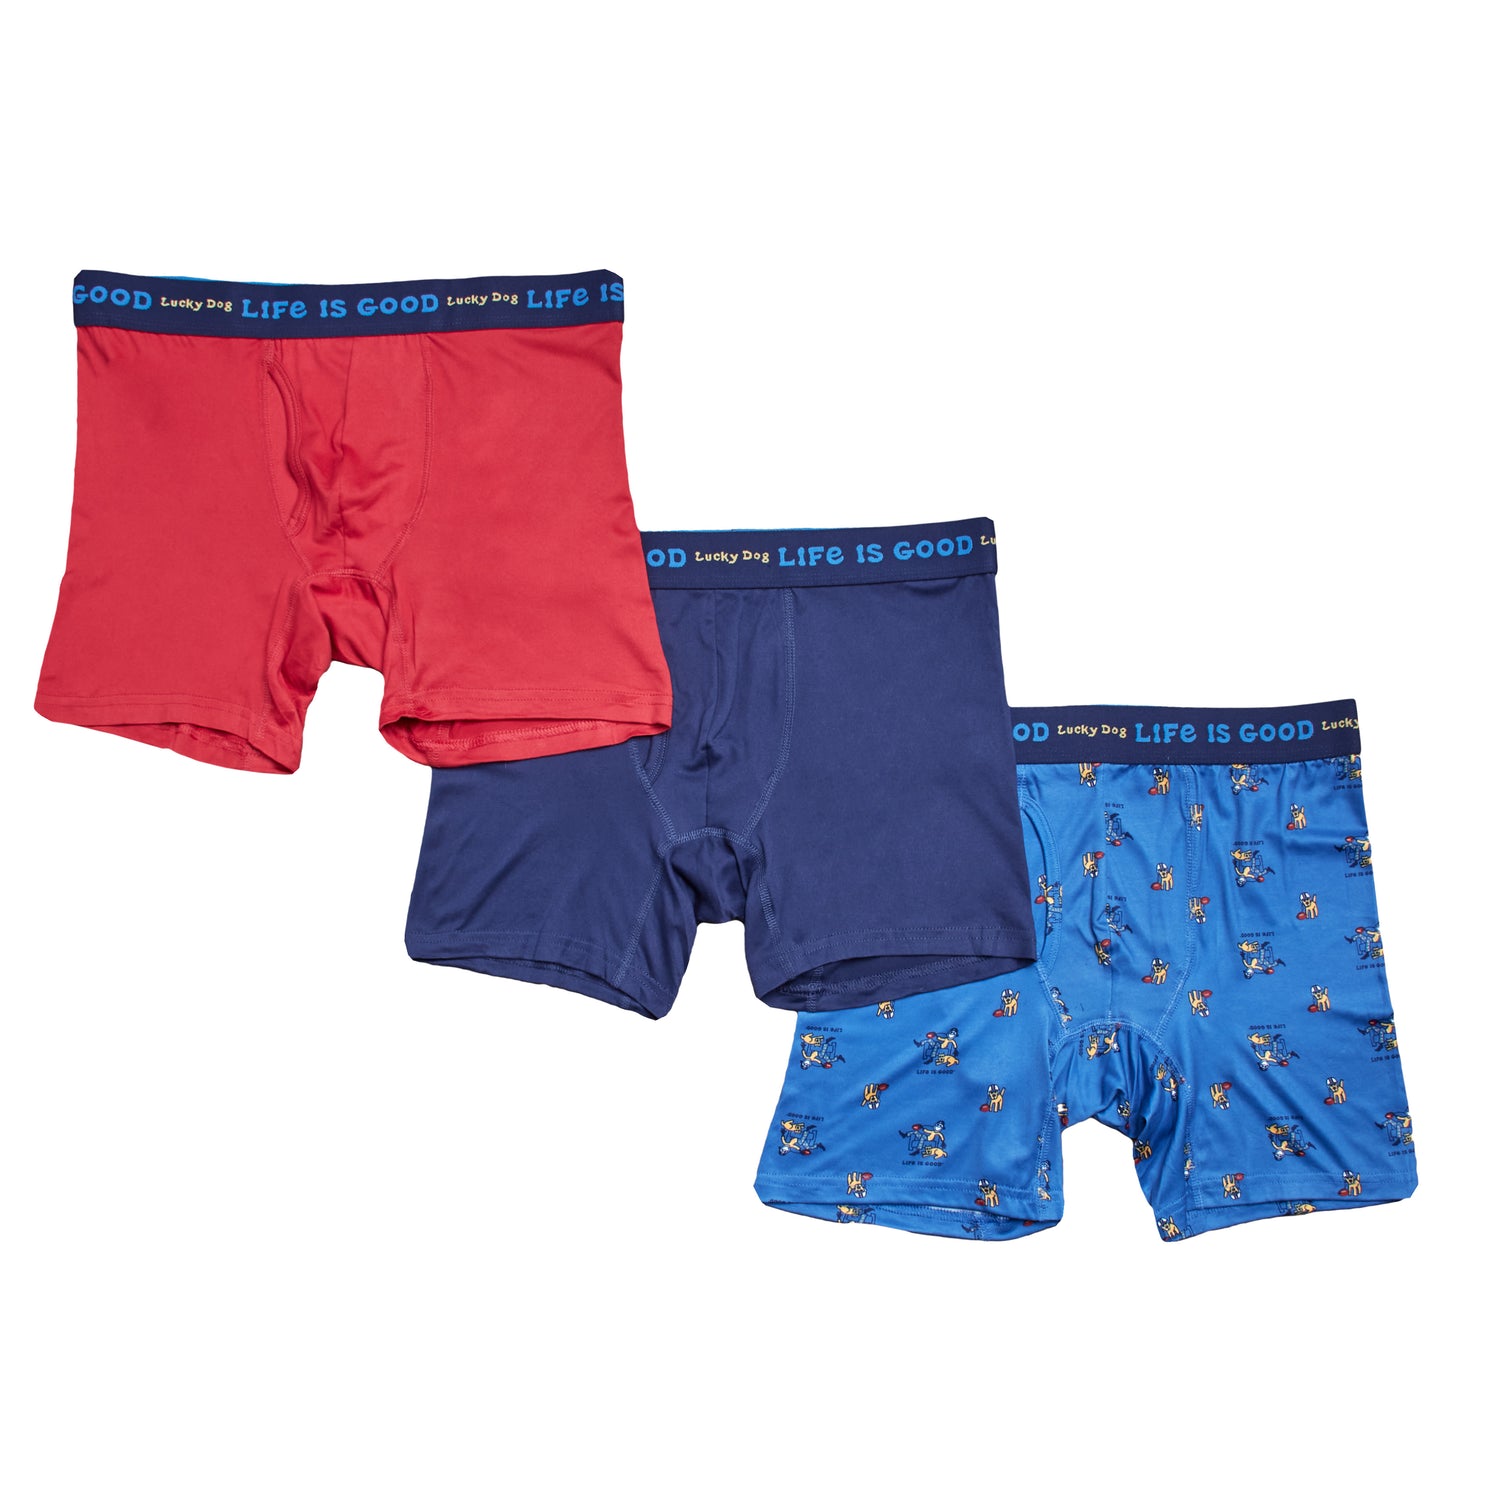  Reebok Boys' Underwear - Performance Boxer Briefs (5 Pack),  Size Medium, Black/Grey/Red/Black Print: Clothing, Shoes & Jewelry